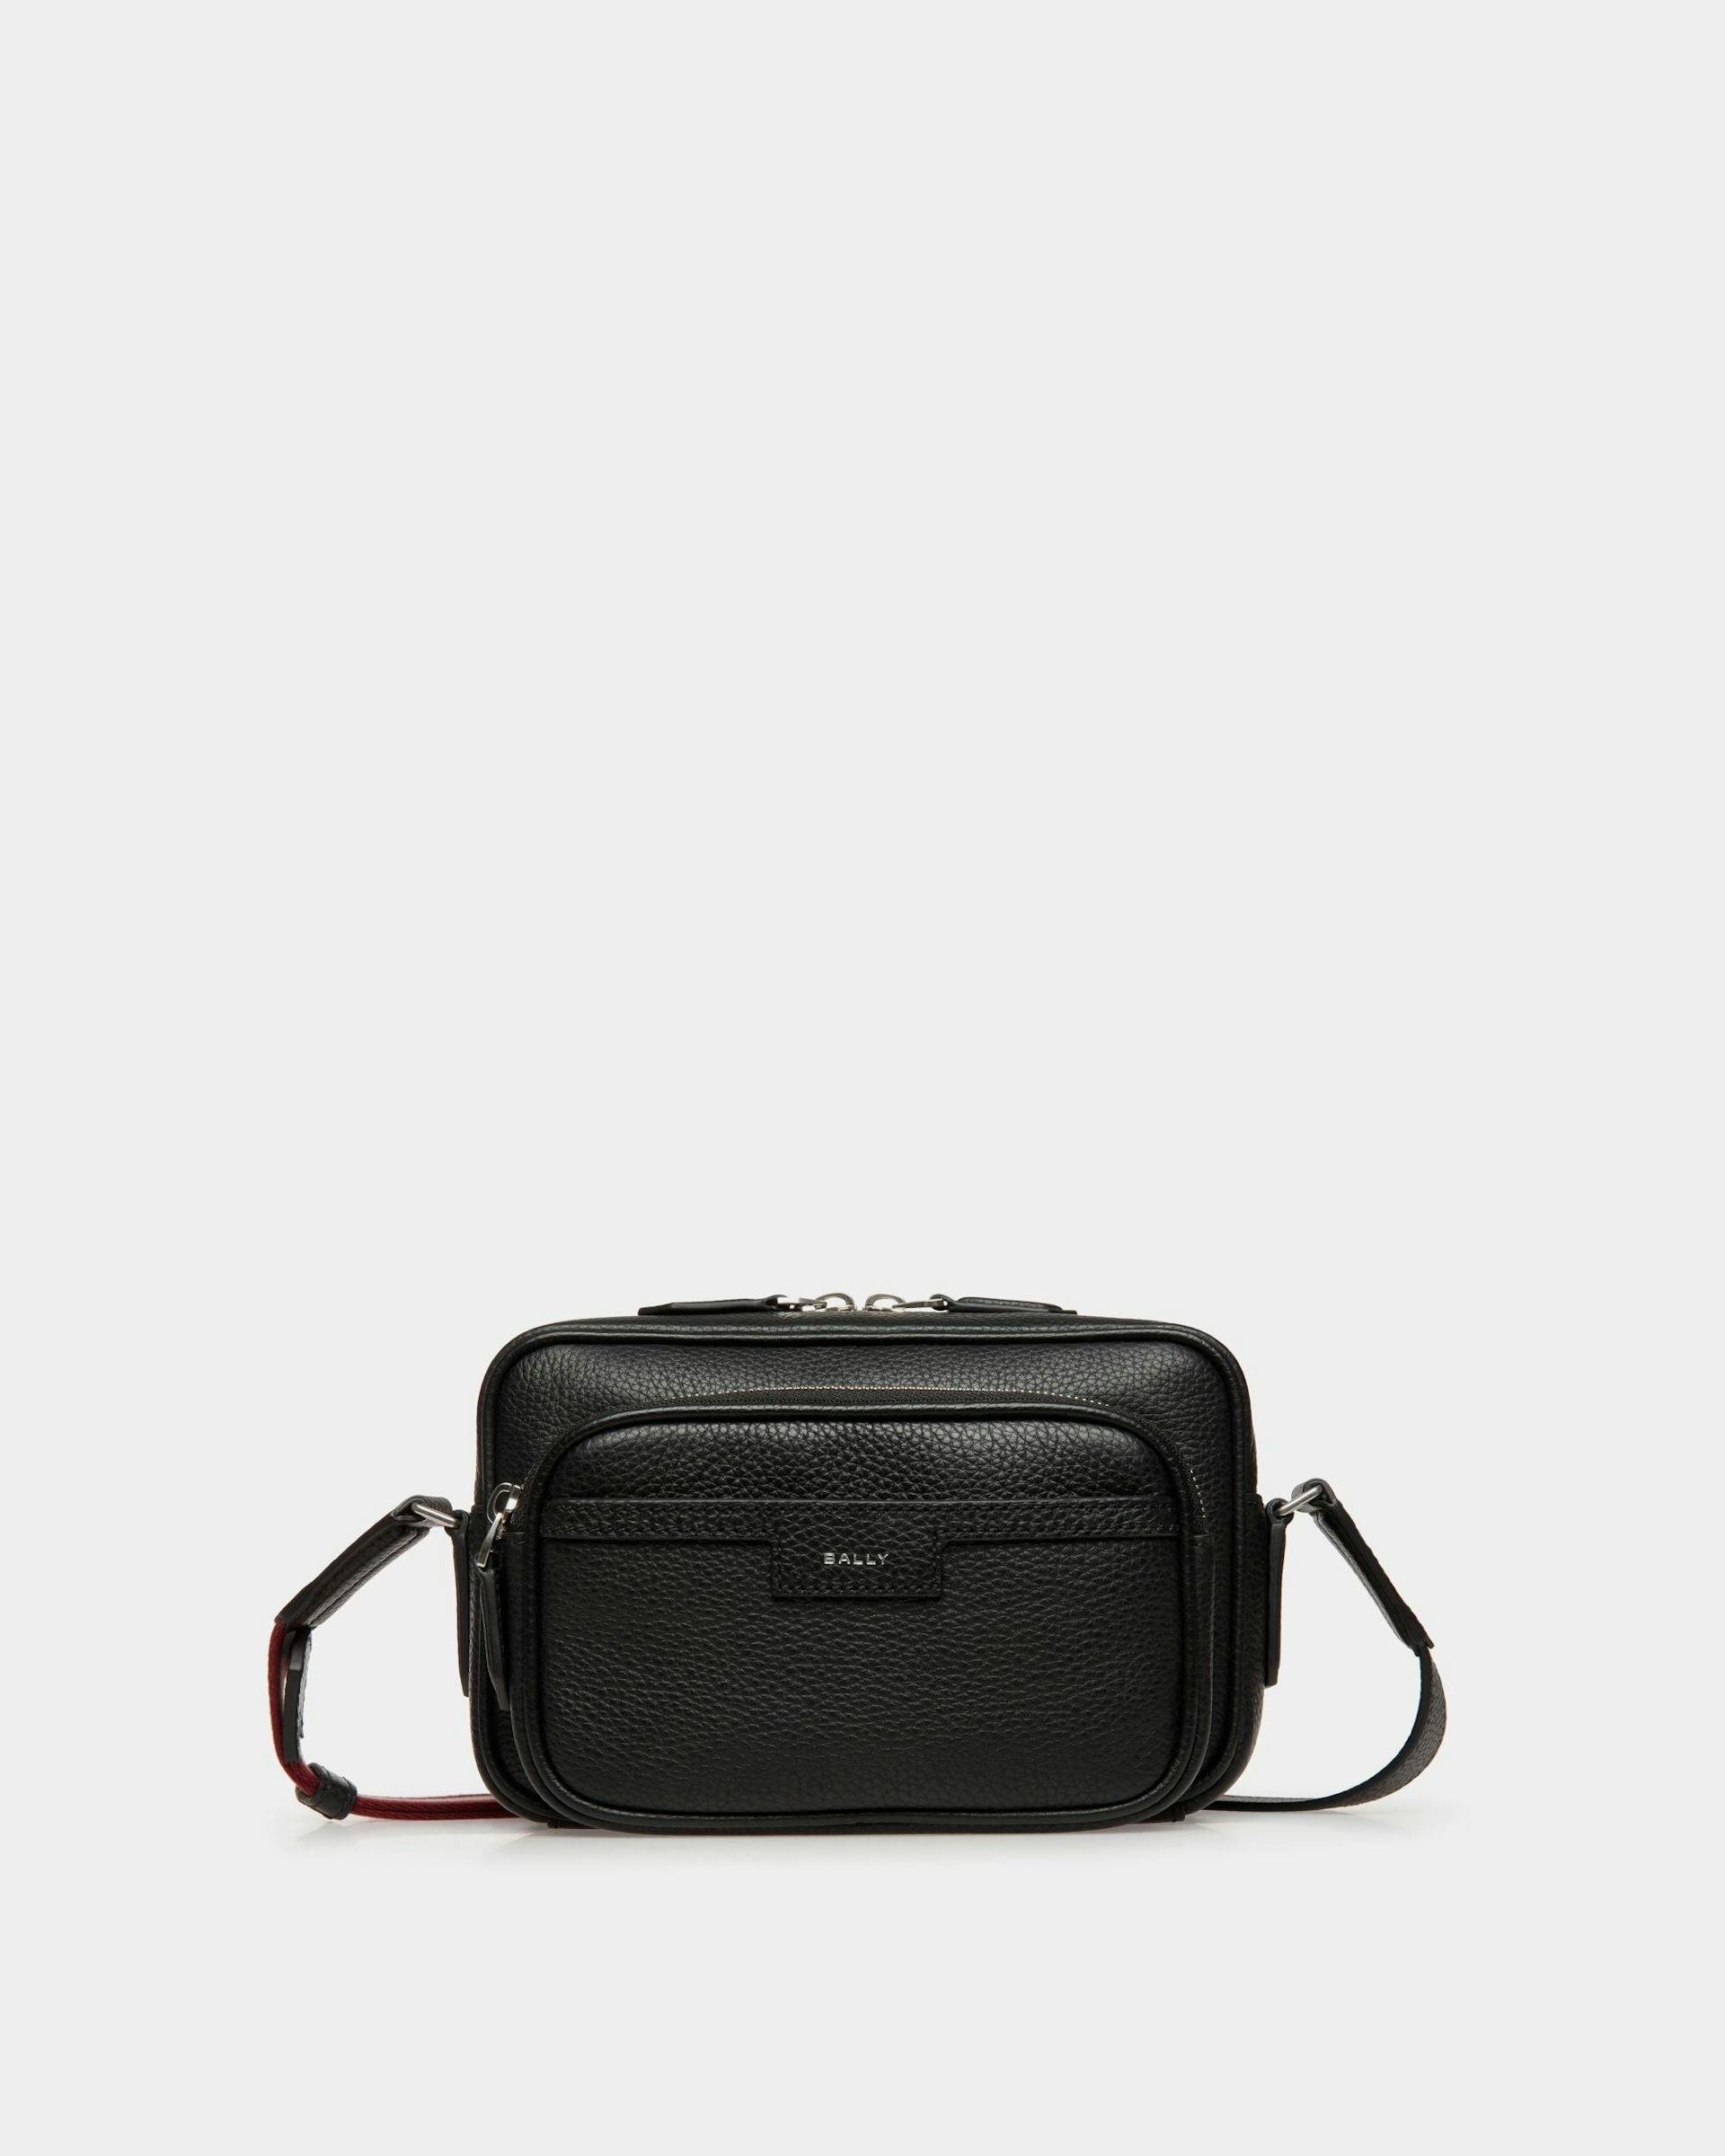 Men's Code Crossbody Bag in Black Grained Leather | Bally | Still Life Front